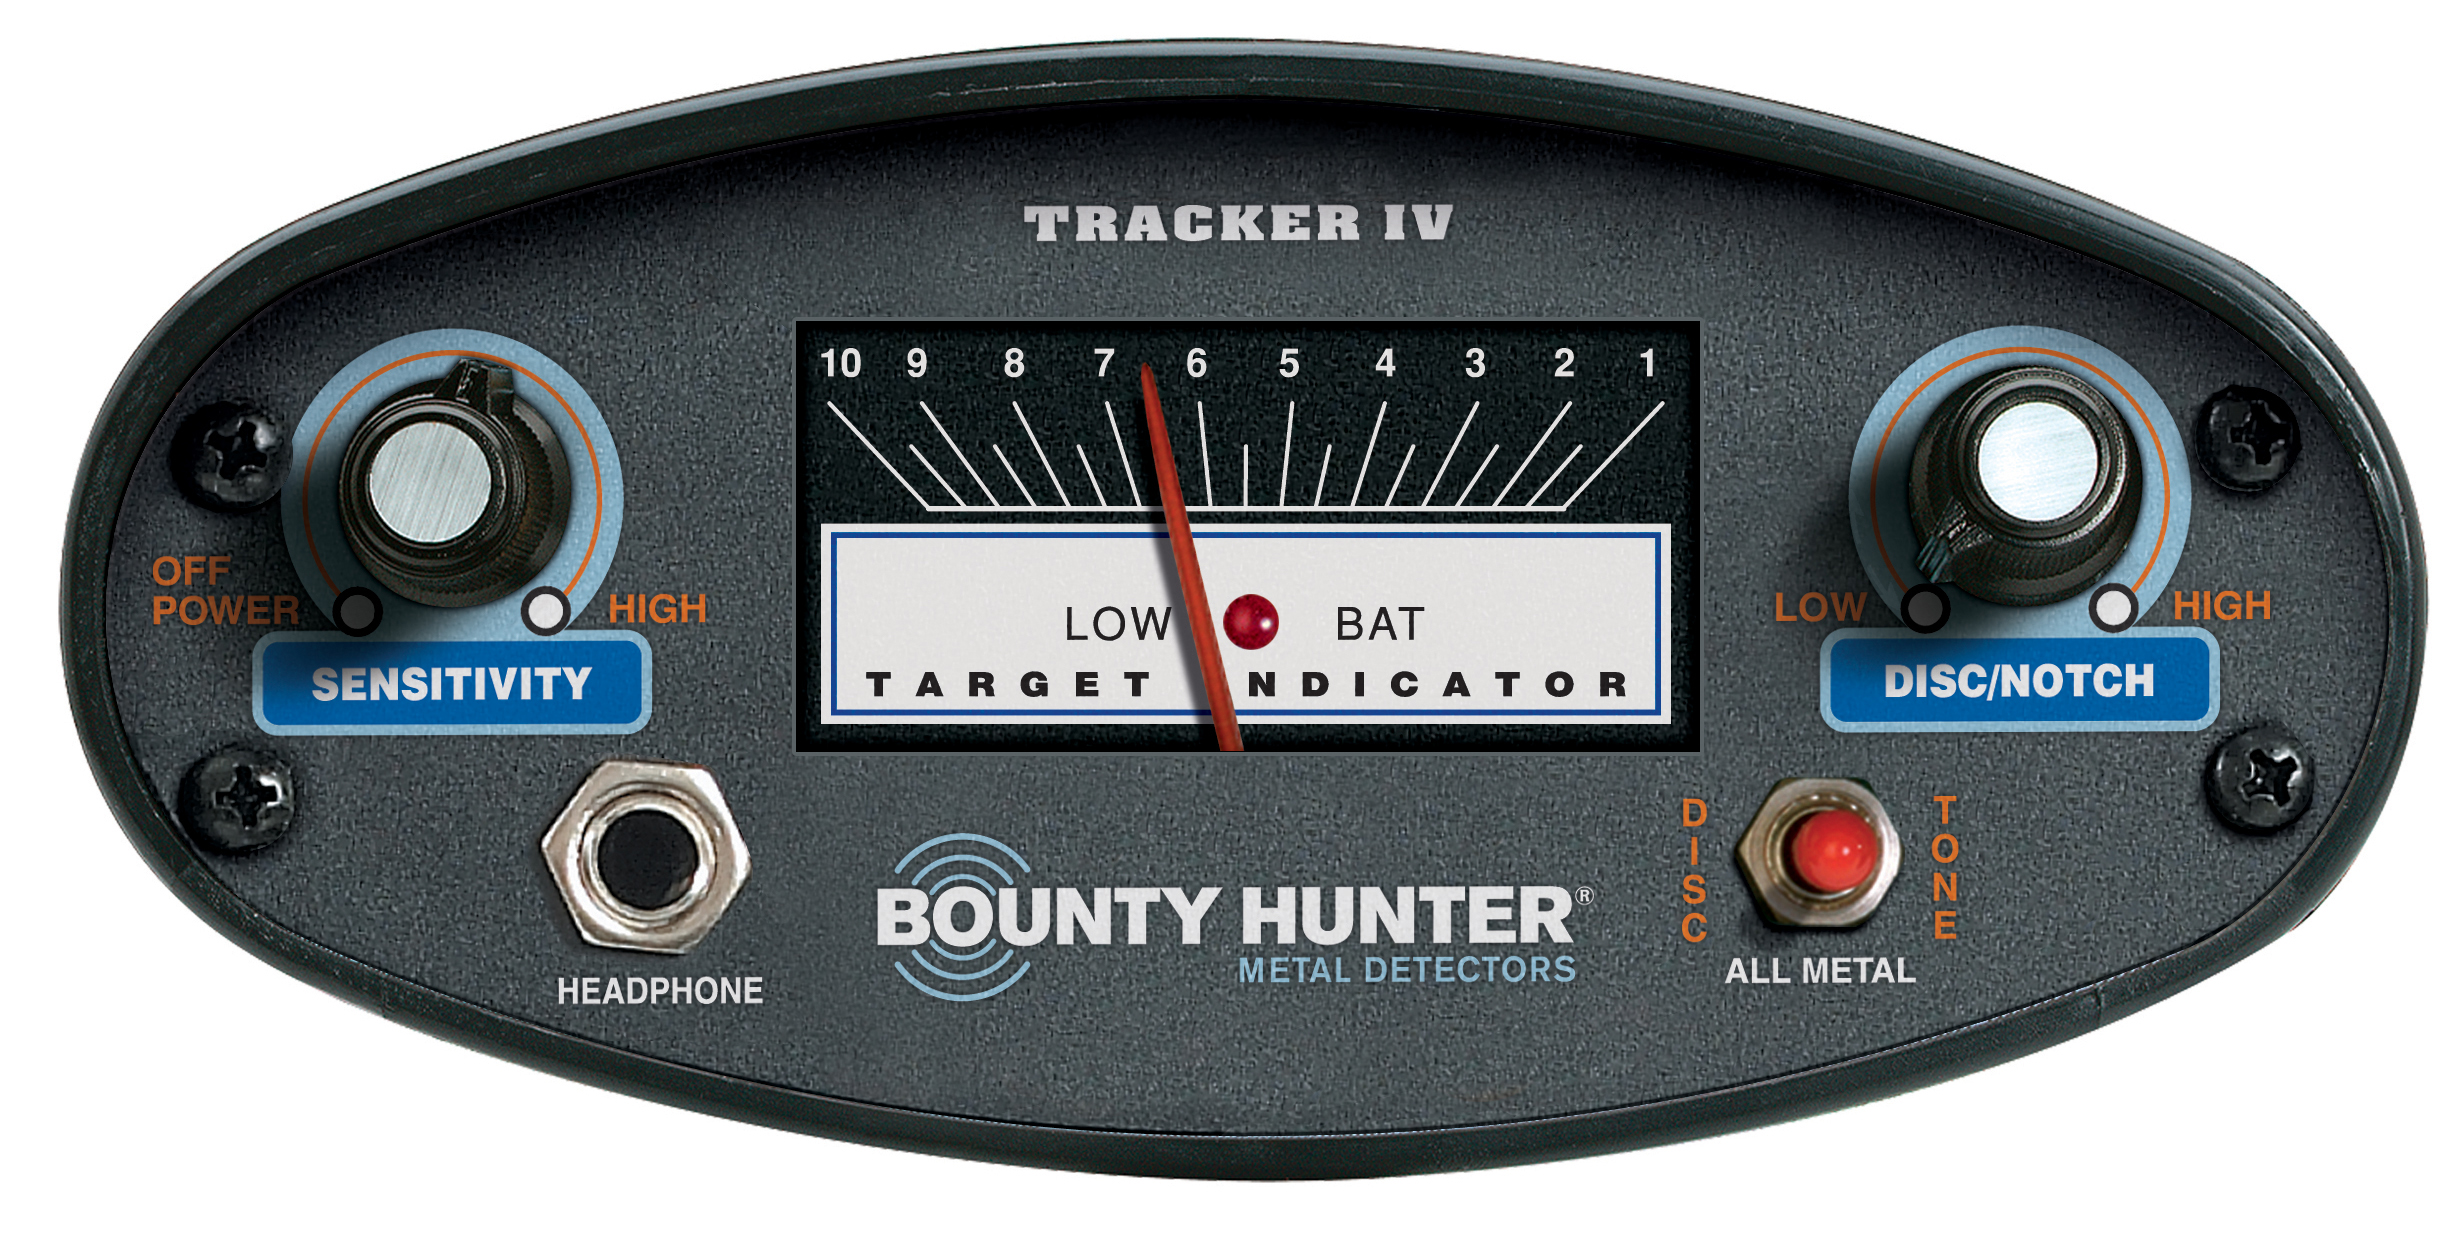 BOUNTY HUNTER Tracker IV Detector de metales